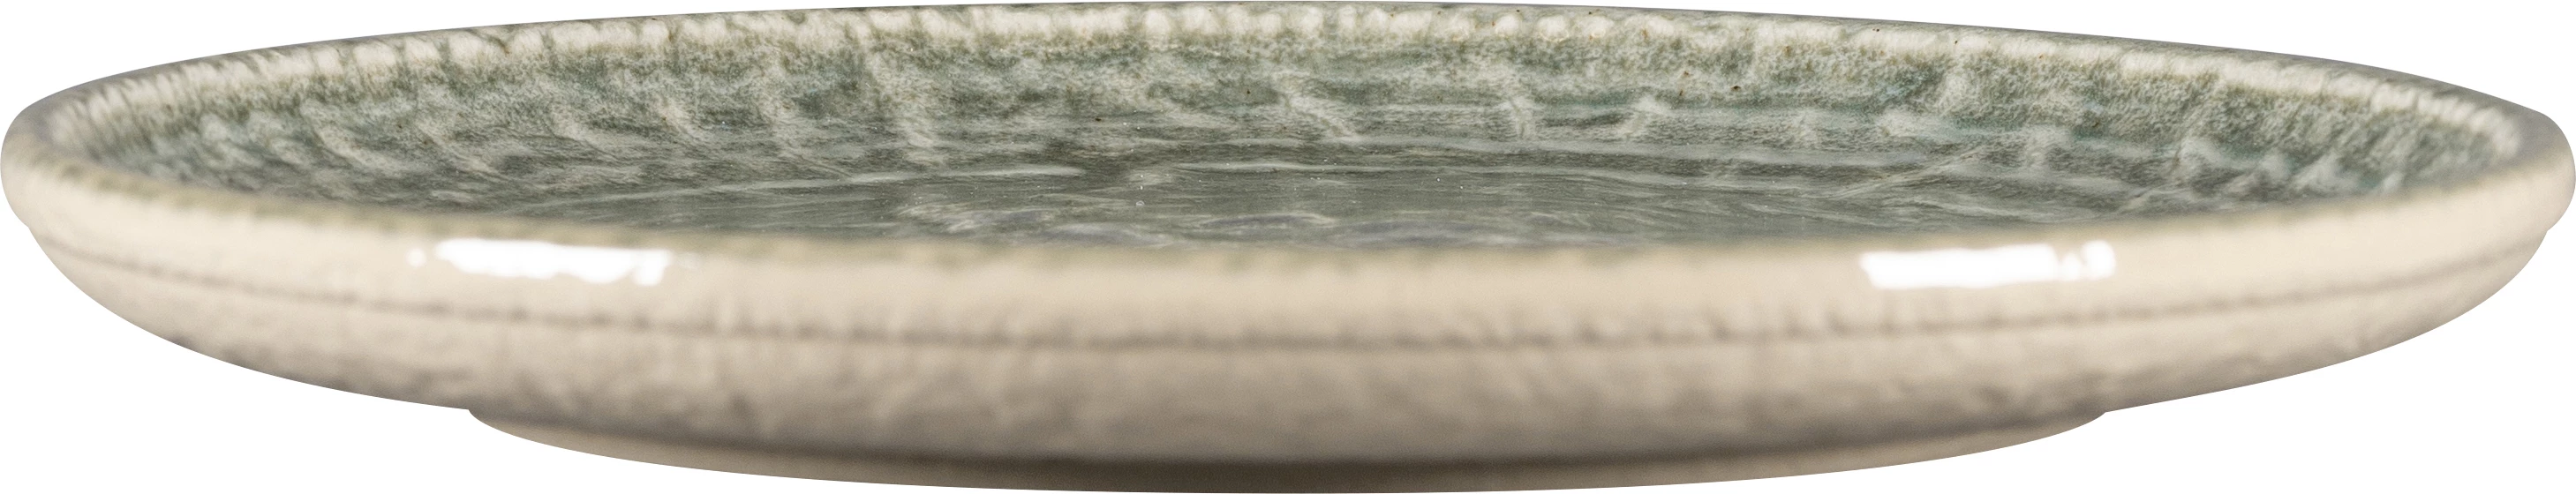 RAK Krush tallerken uden fane, flad, grøn, ø20,9 cm